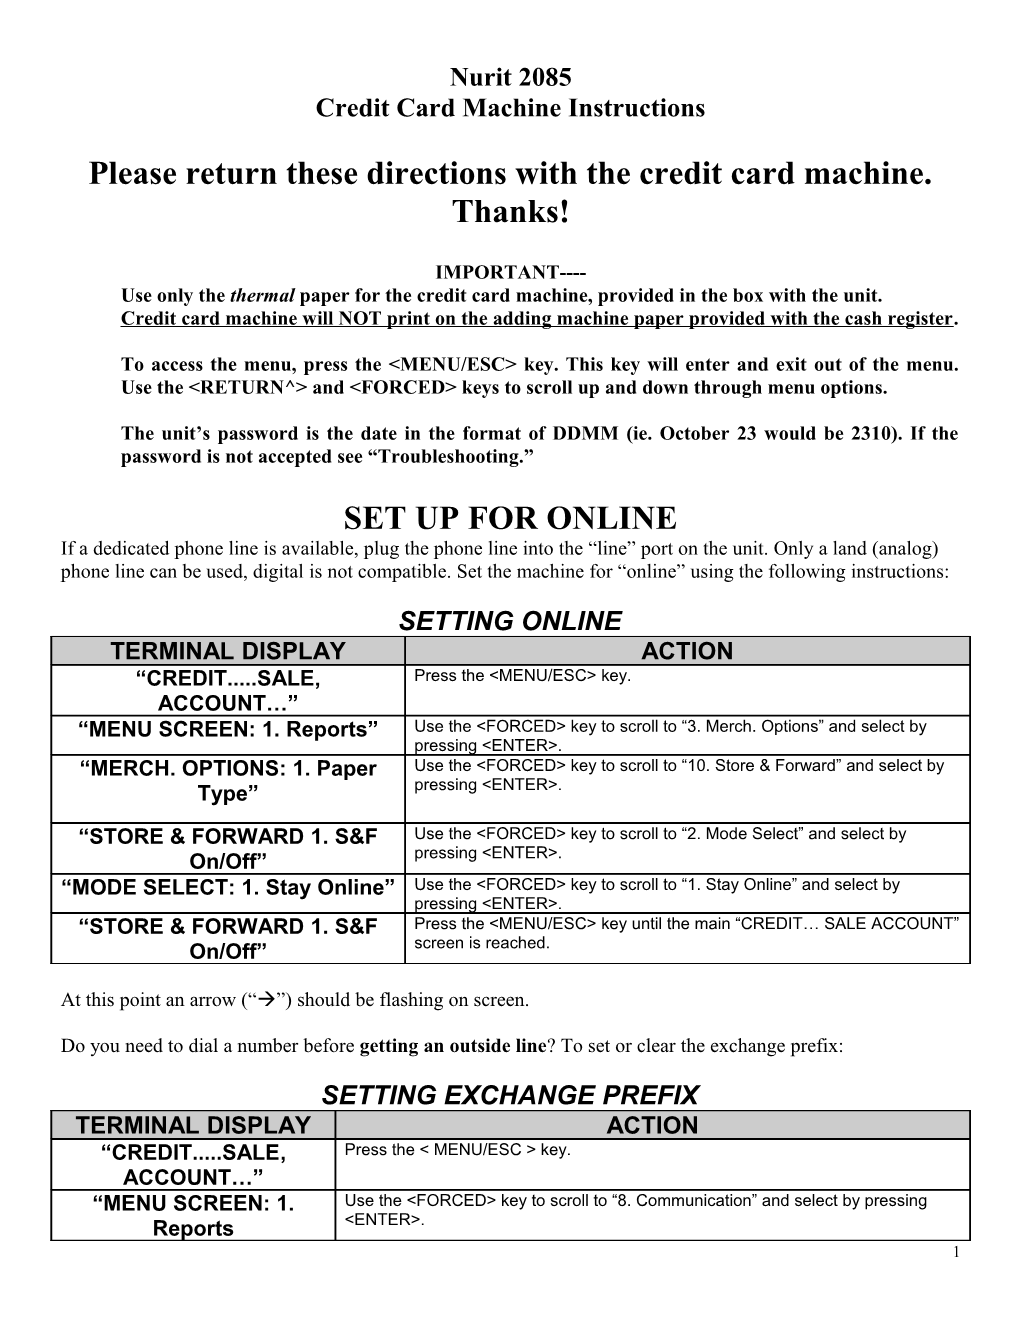 Nurit 2085 Credit Card Machine Instructions